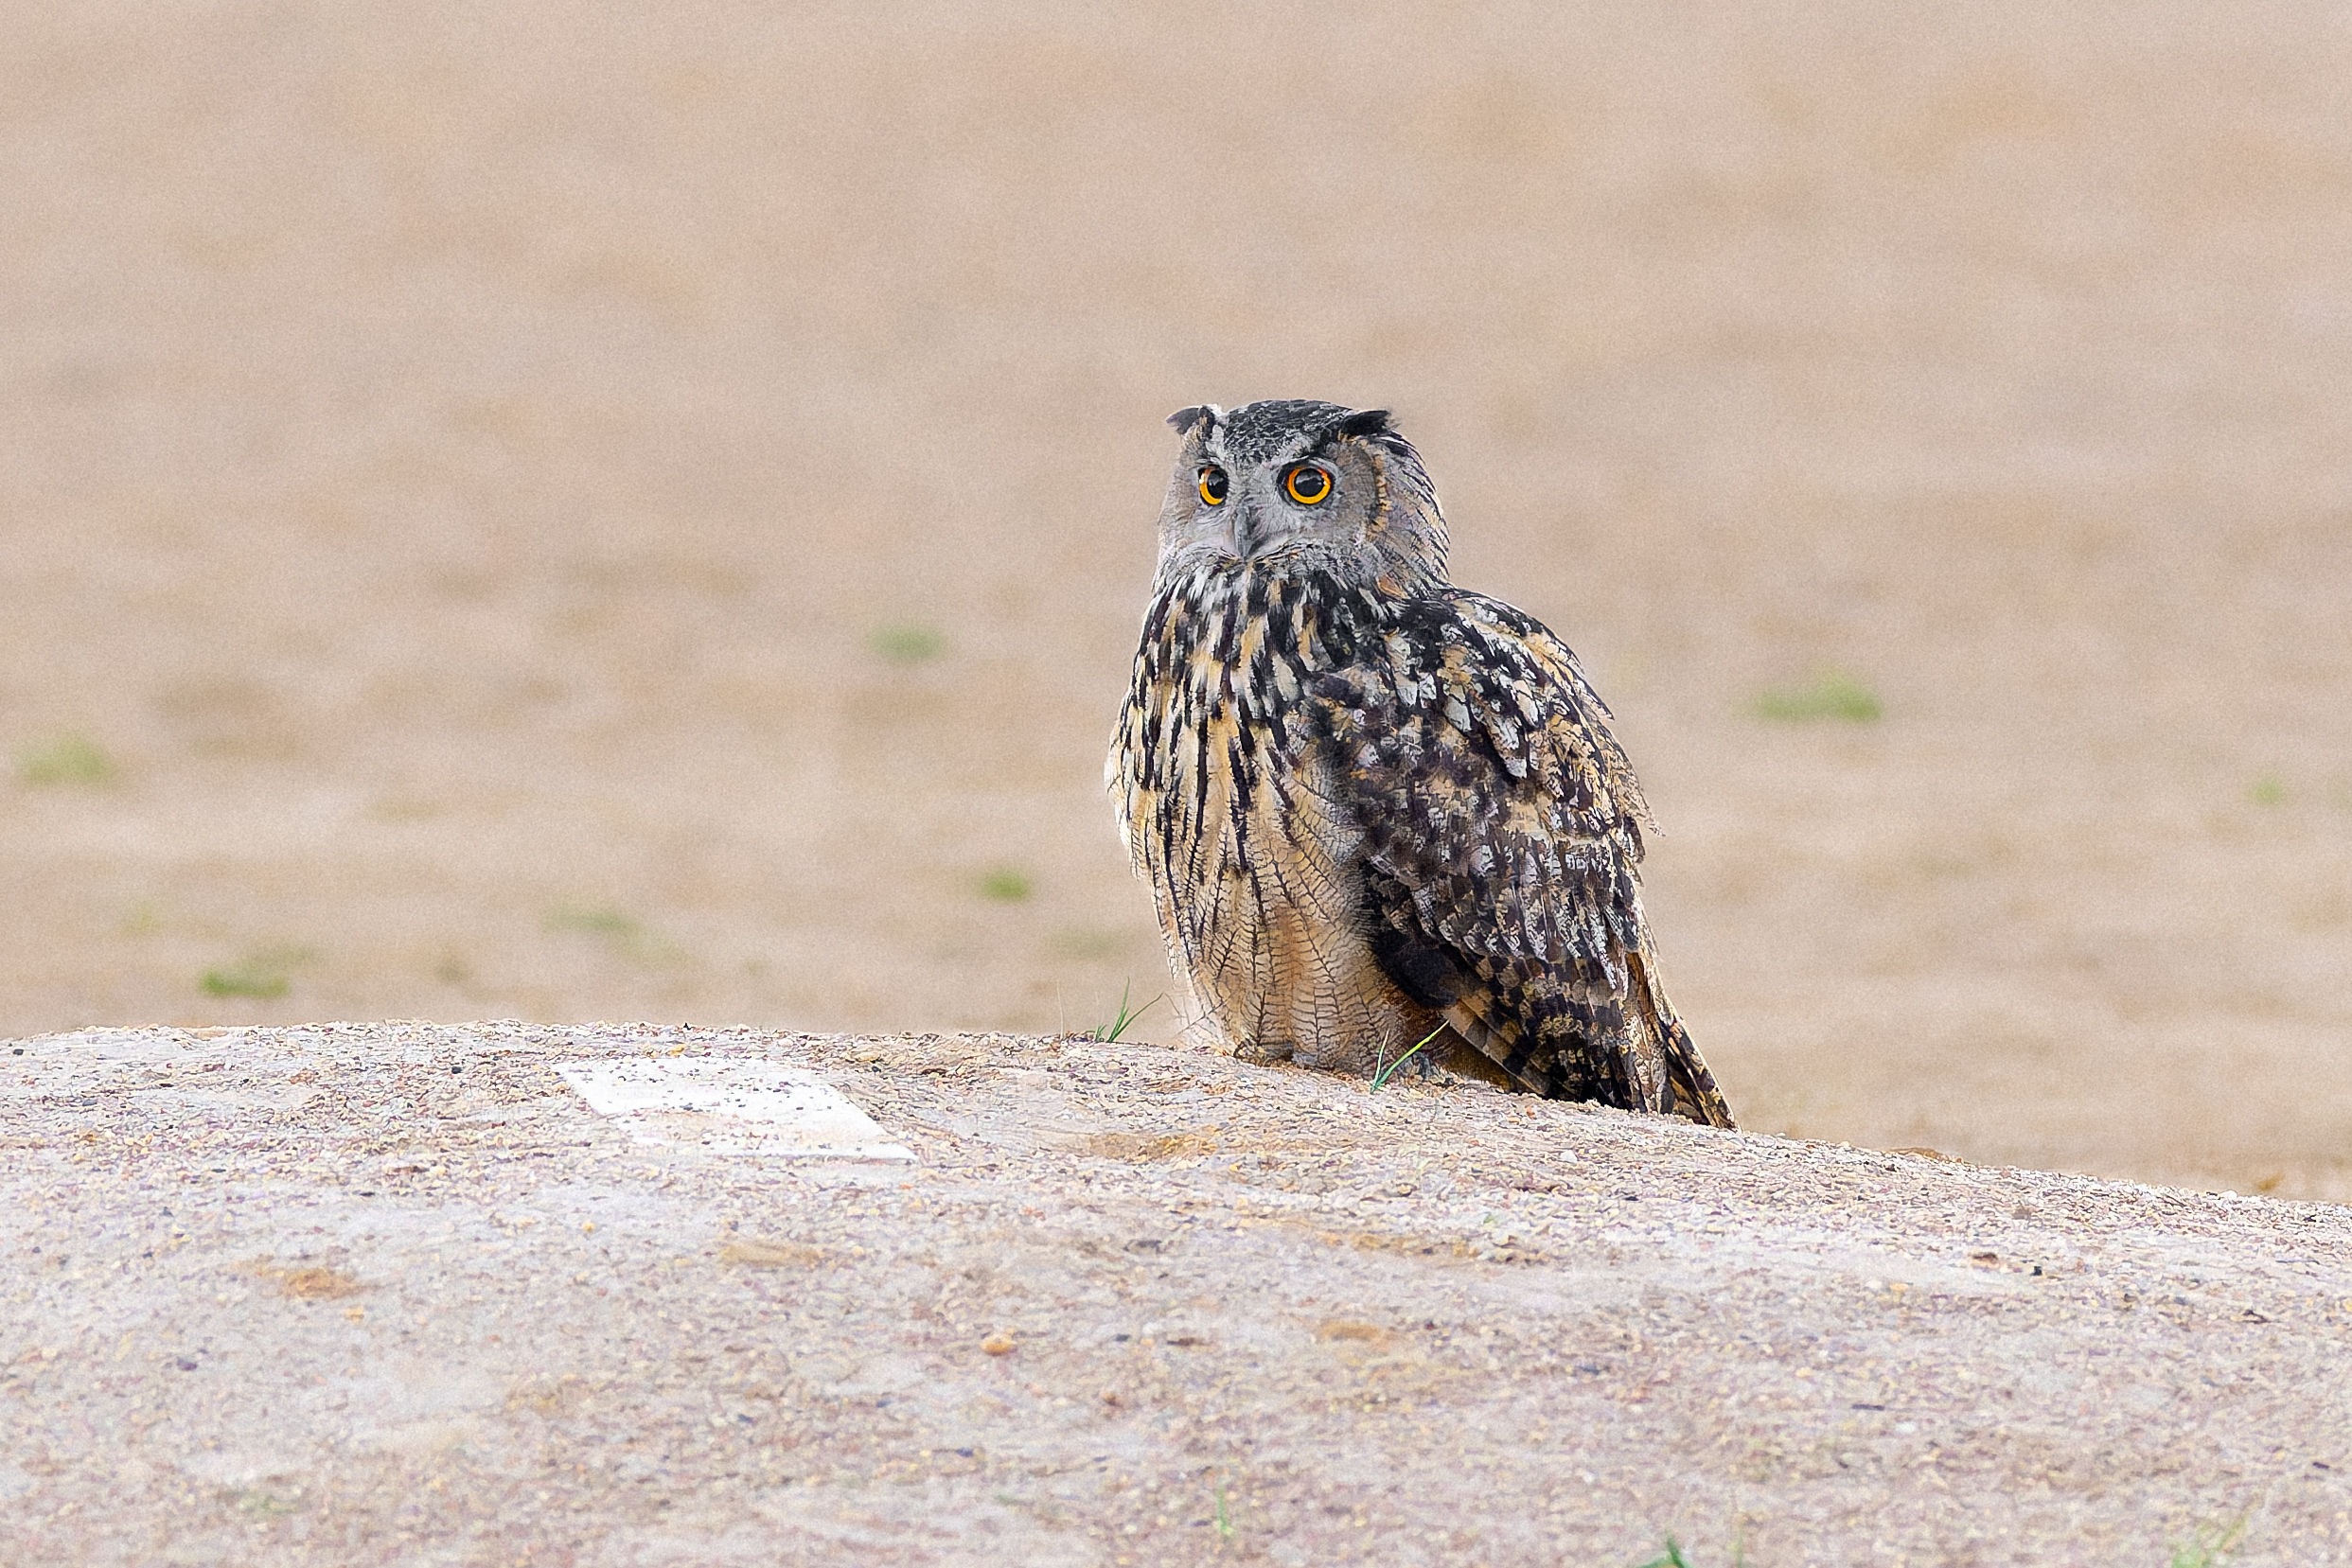 A big owl on a baseball field pitchers mound.